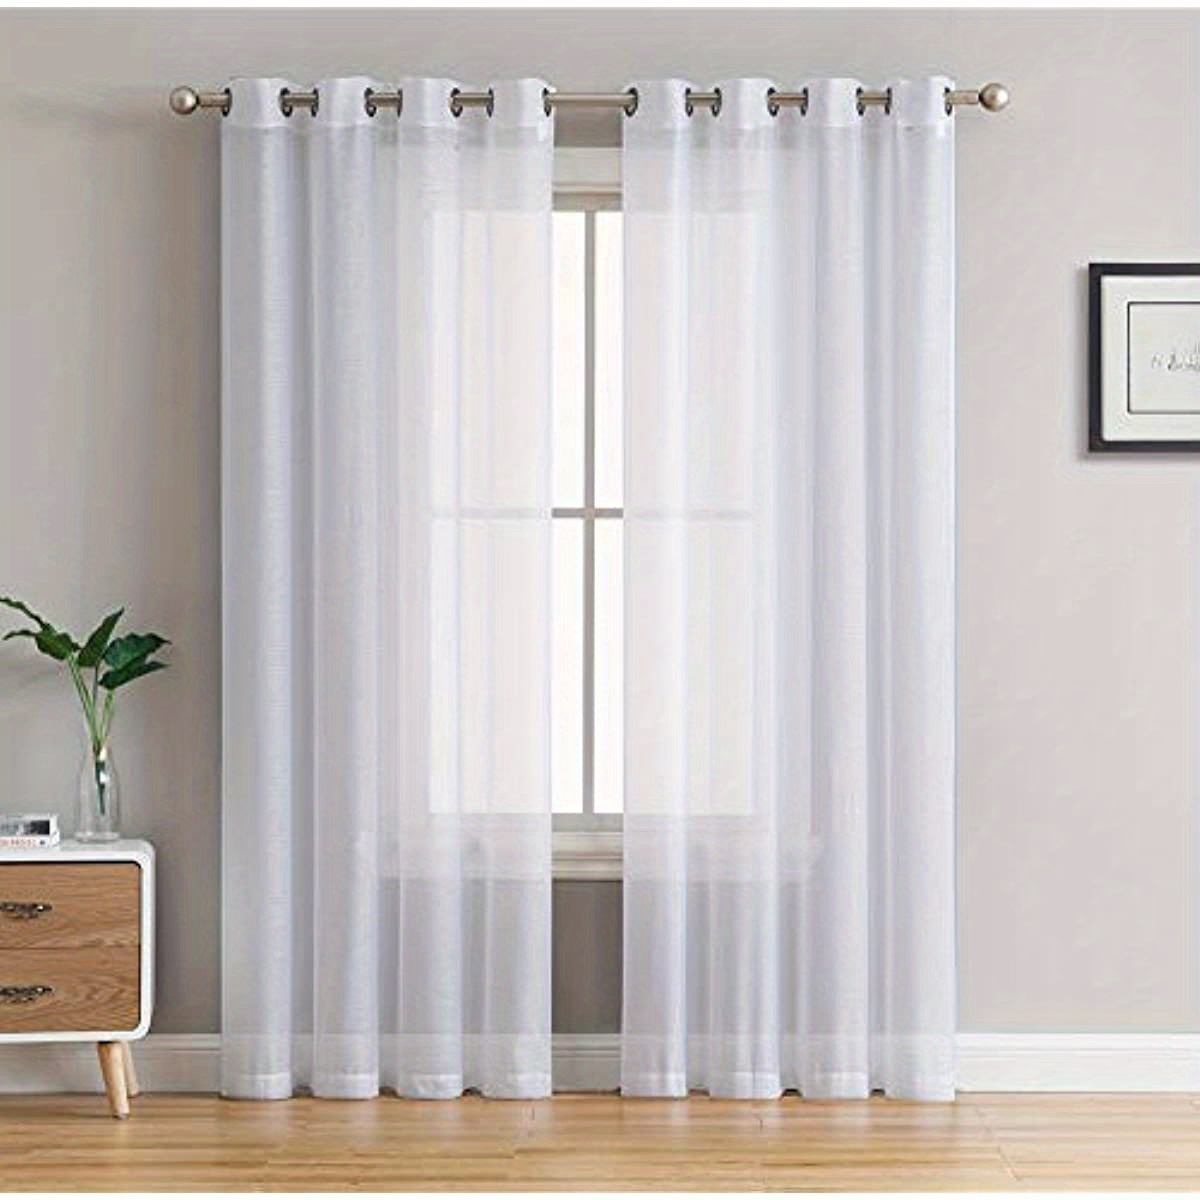 Cortinas traslúcidas de 72 pulgadas de largo, cortinas blancas  transparentes para dormitorio, sala de estar, ventana, cortinas blancas  transparentes